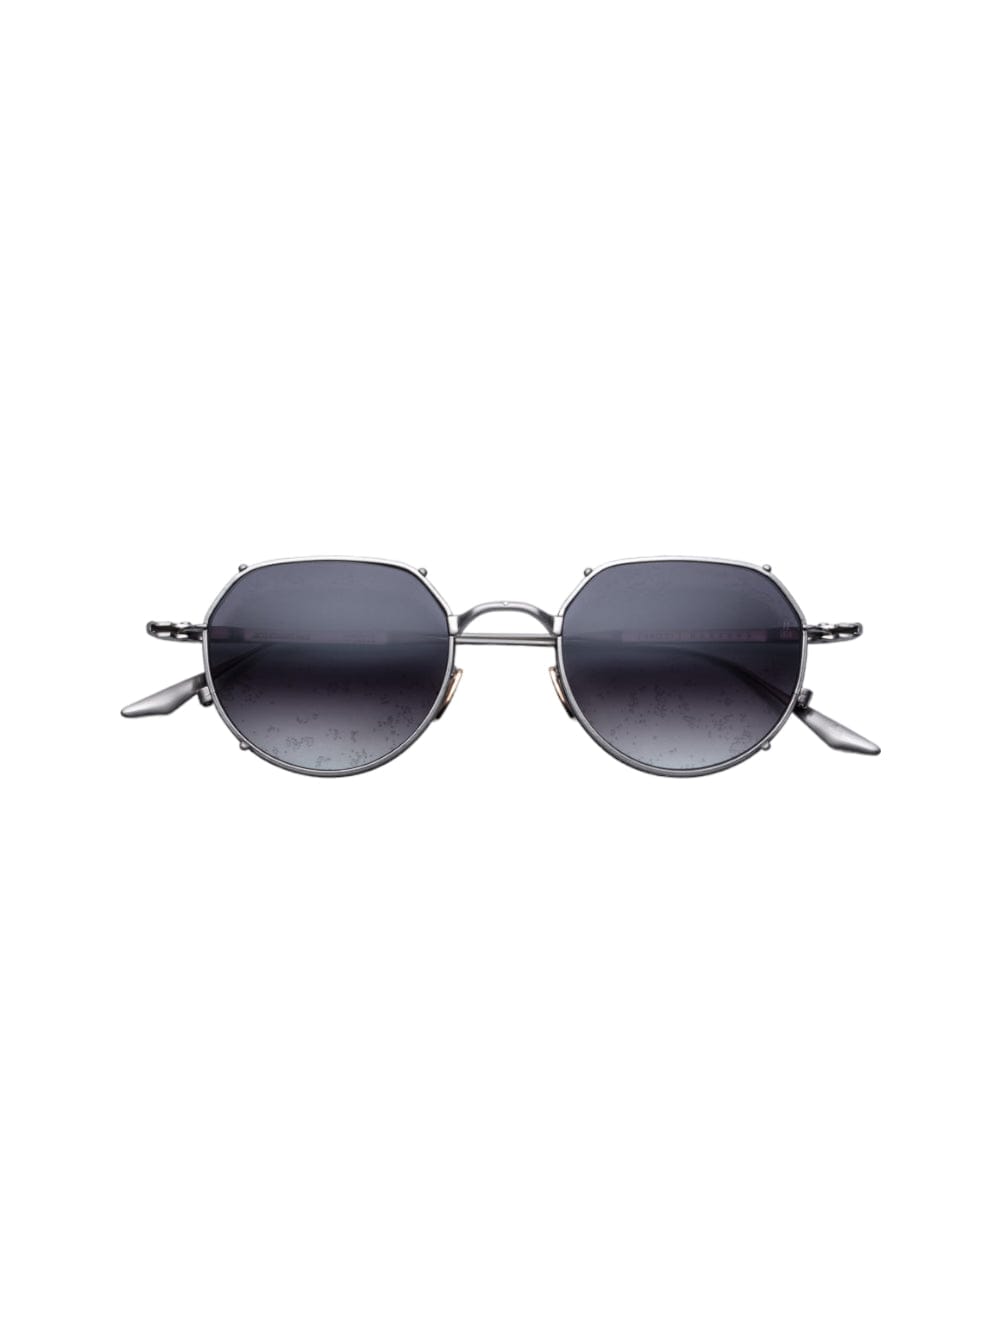 Jacques Marie Mage Hartana - Chrome Sunglasses